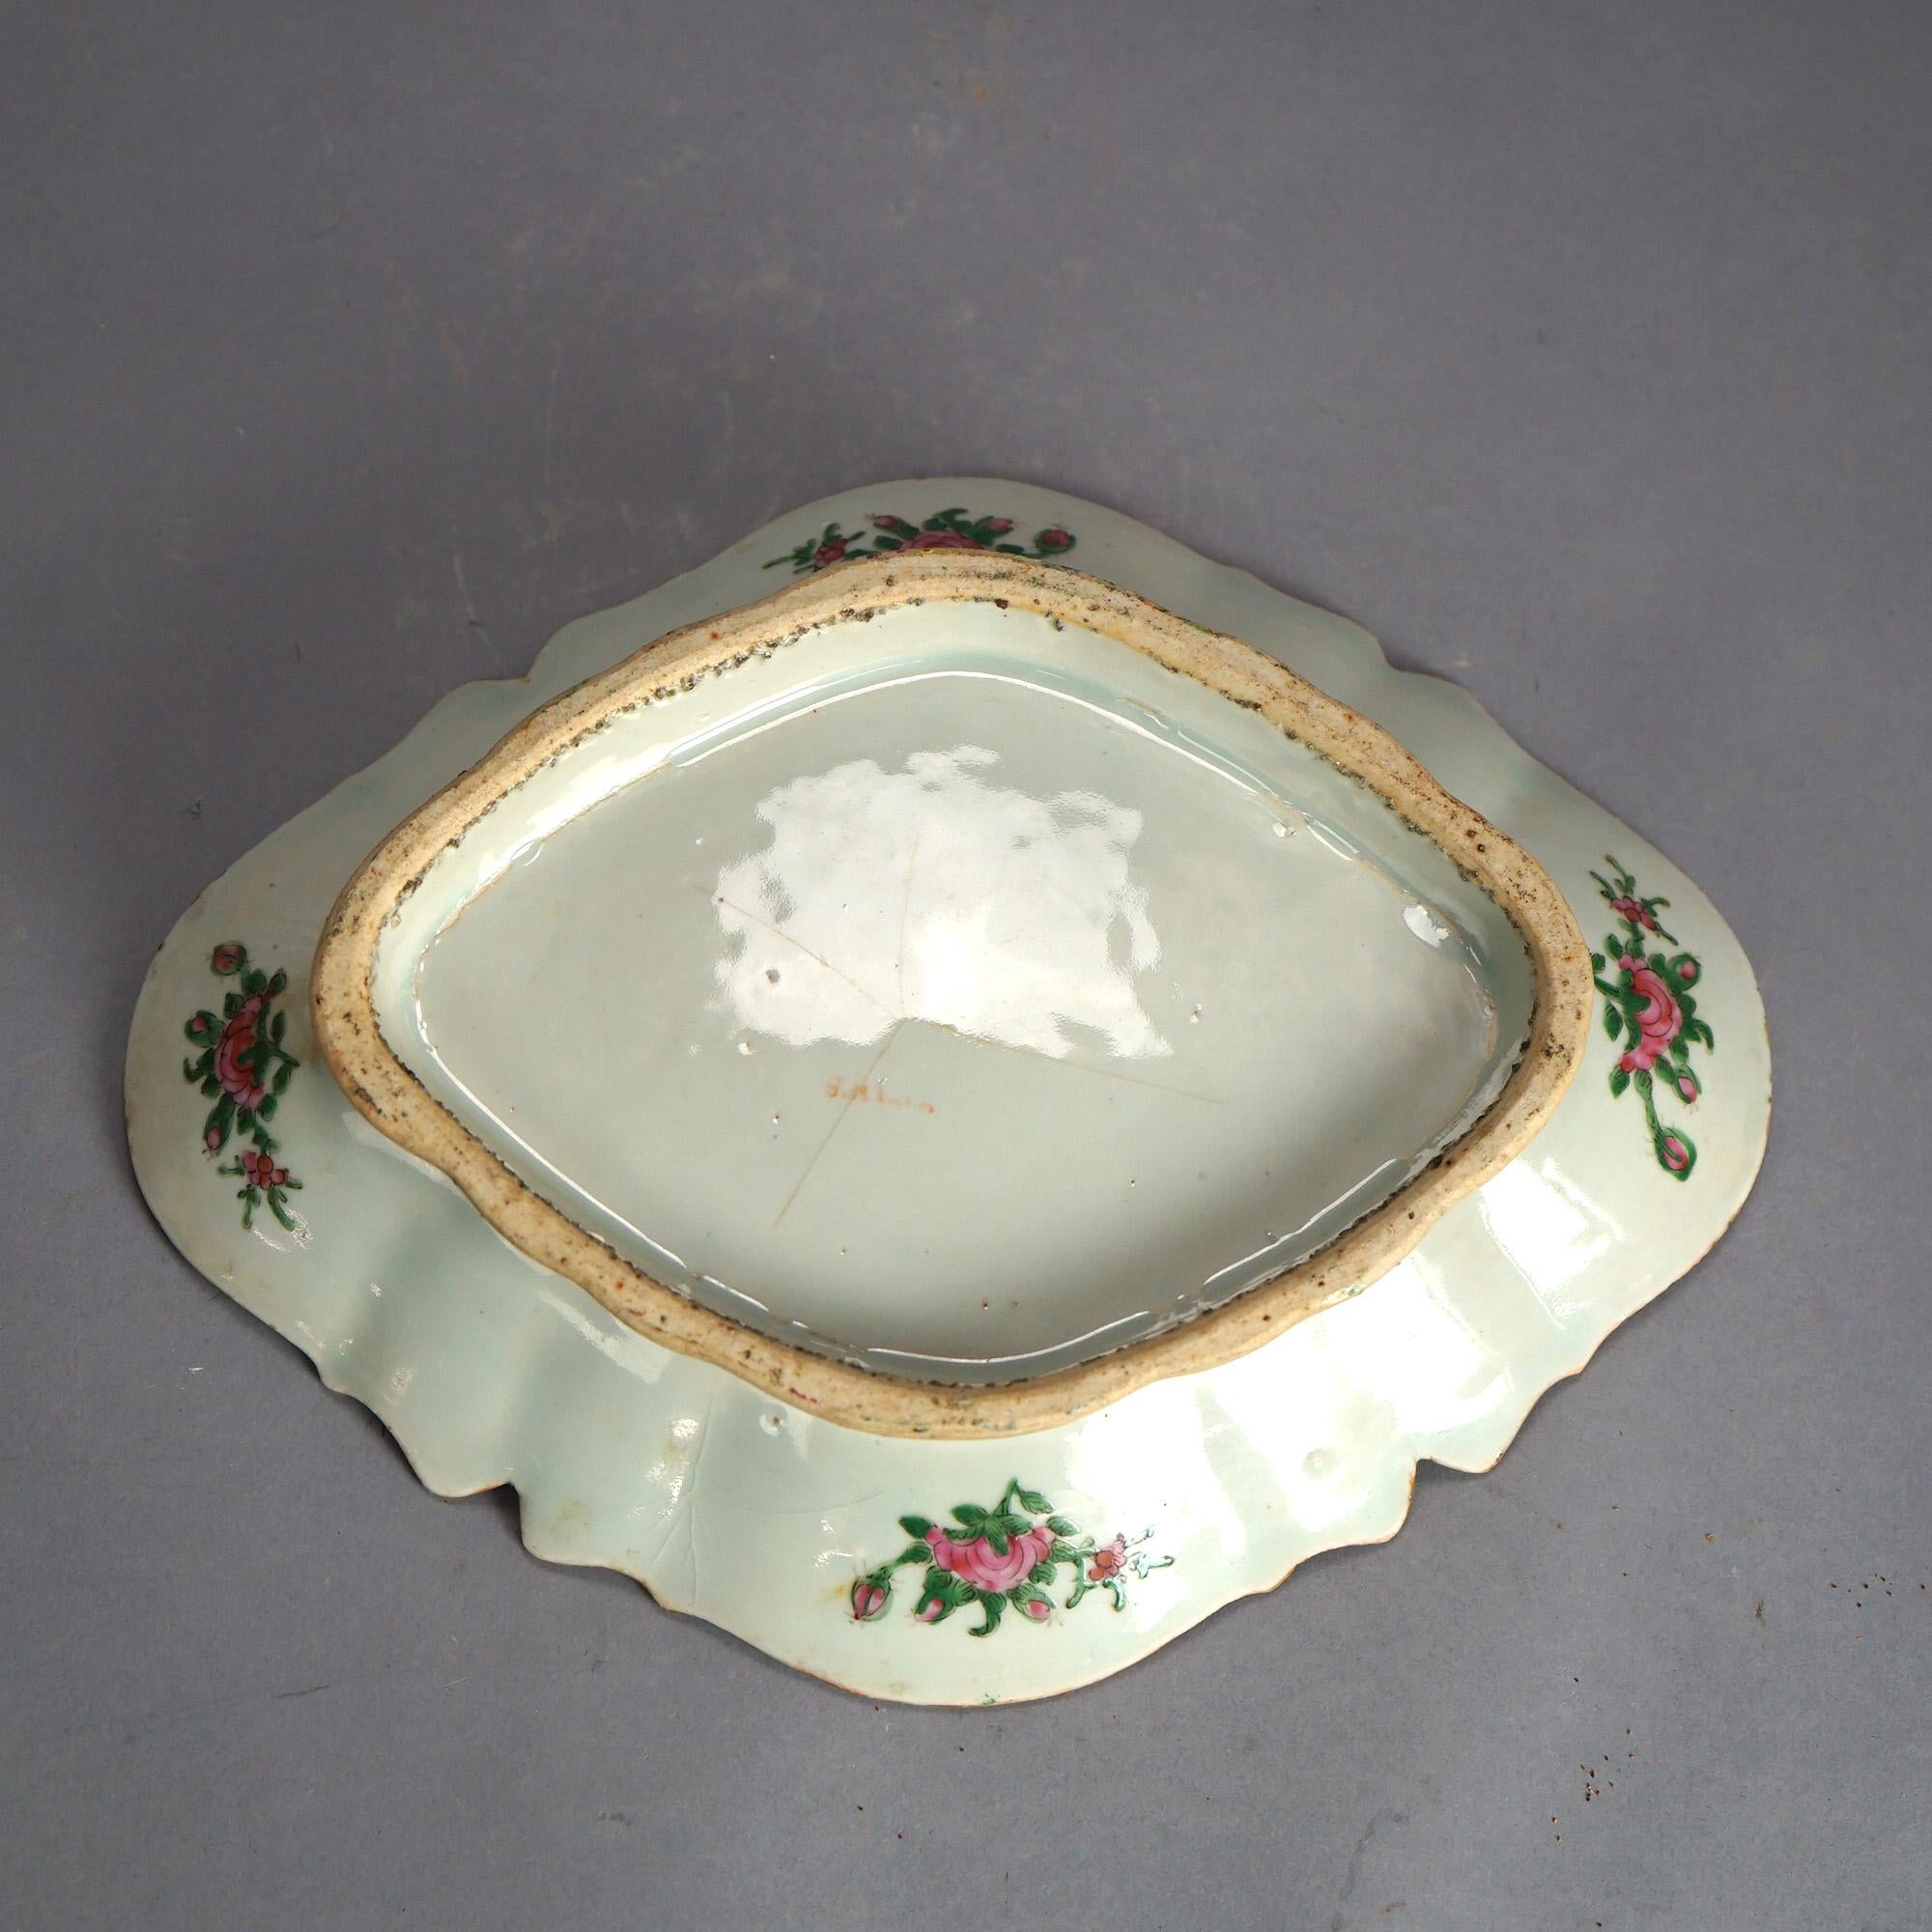 Antique Chinese Rose Medallion Porcelain Platter with Reserves having Gardens & Genre Scenes C1900

Measures - 9.5